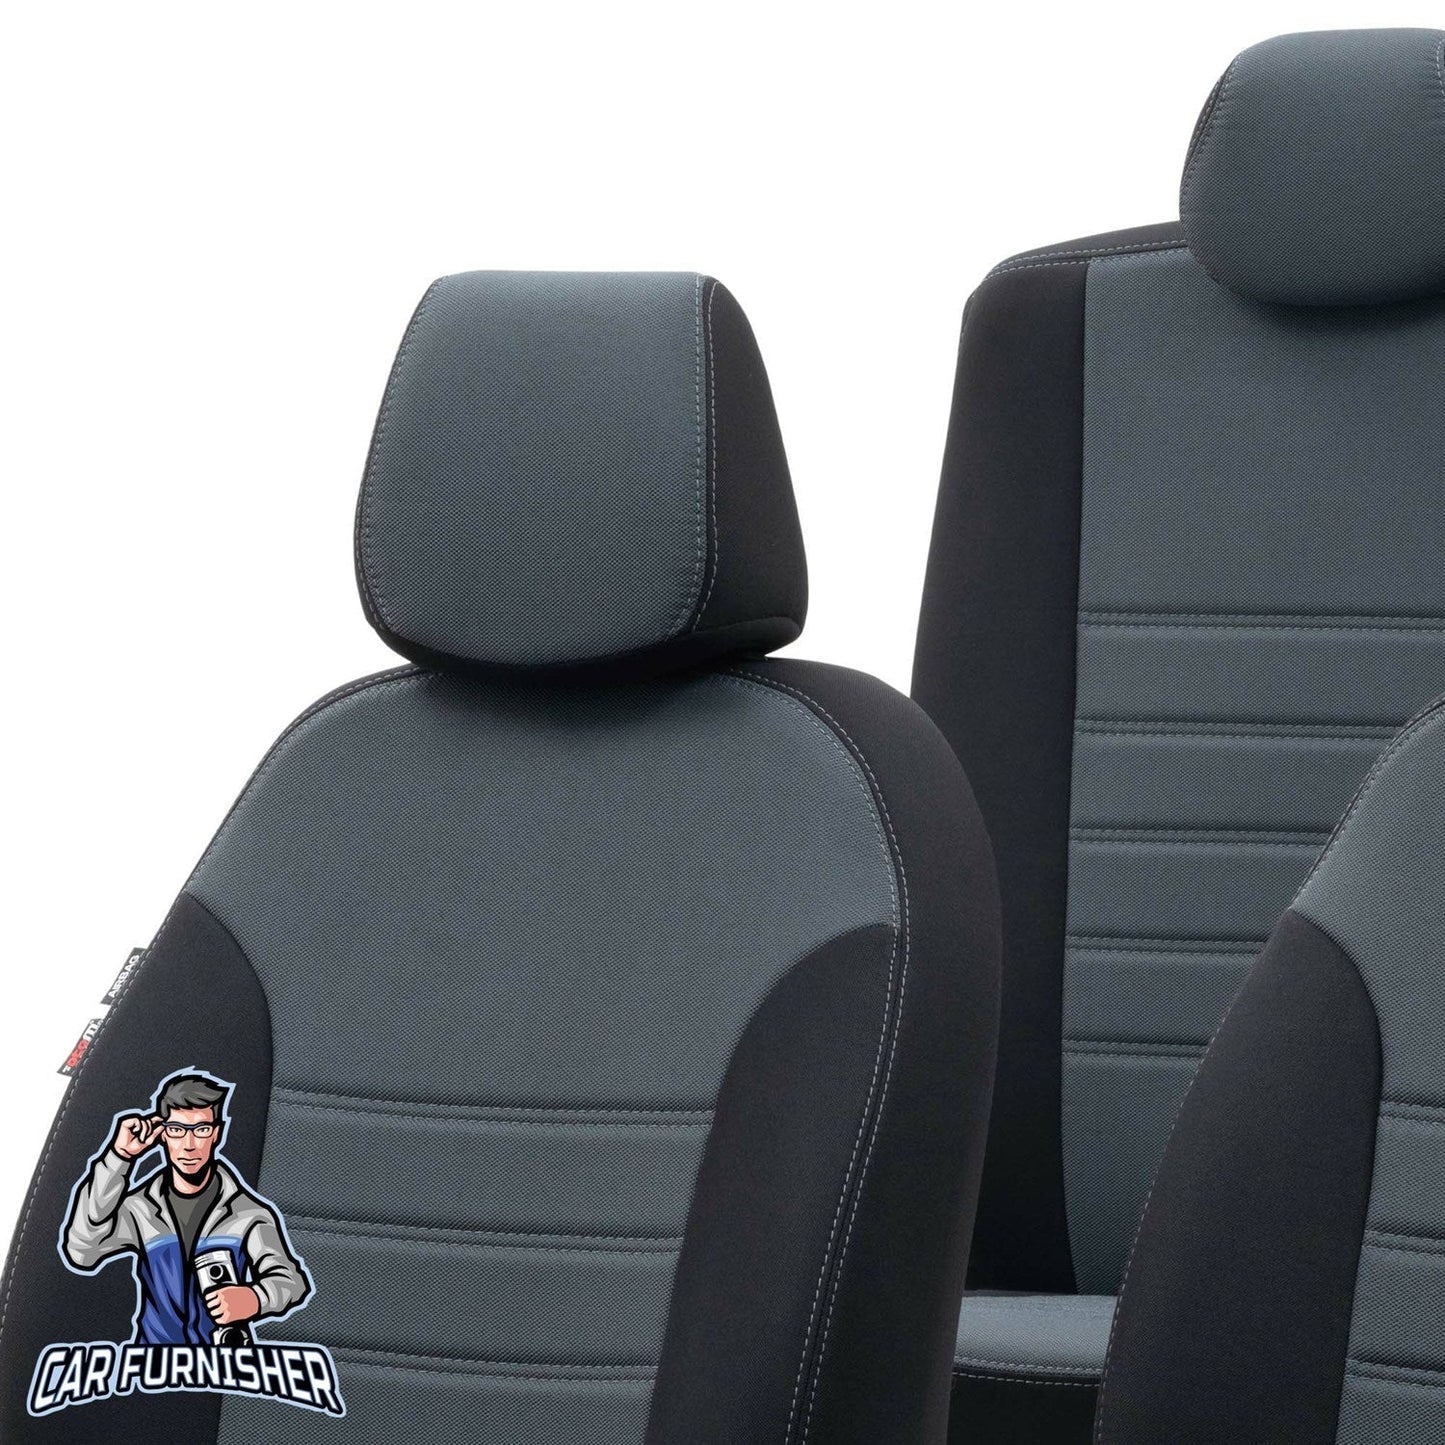 Bmw 1 Series Seat Cover Original Jacquard Design Smoked Black Jacquard Fabric